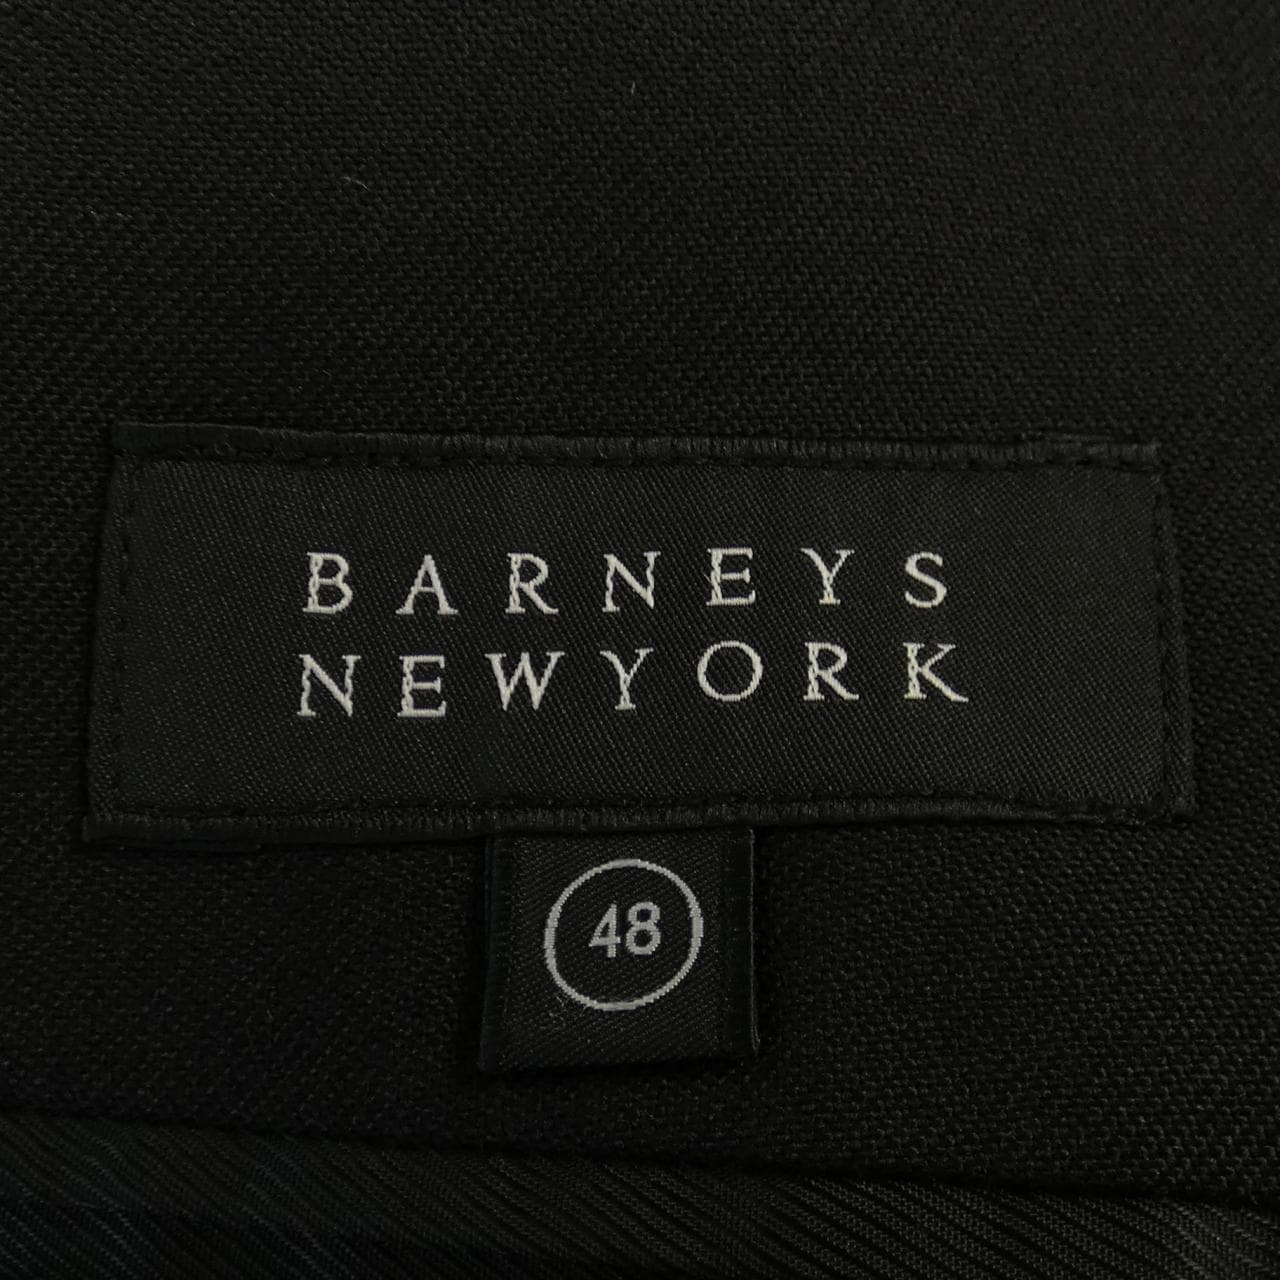 Barneys New York BARNEYS NEW YORK jacket